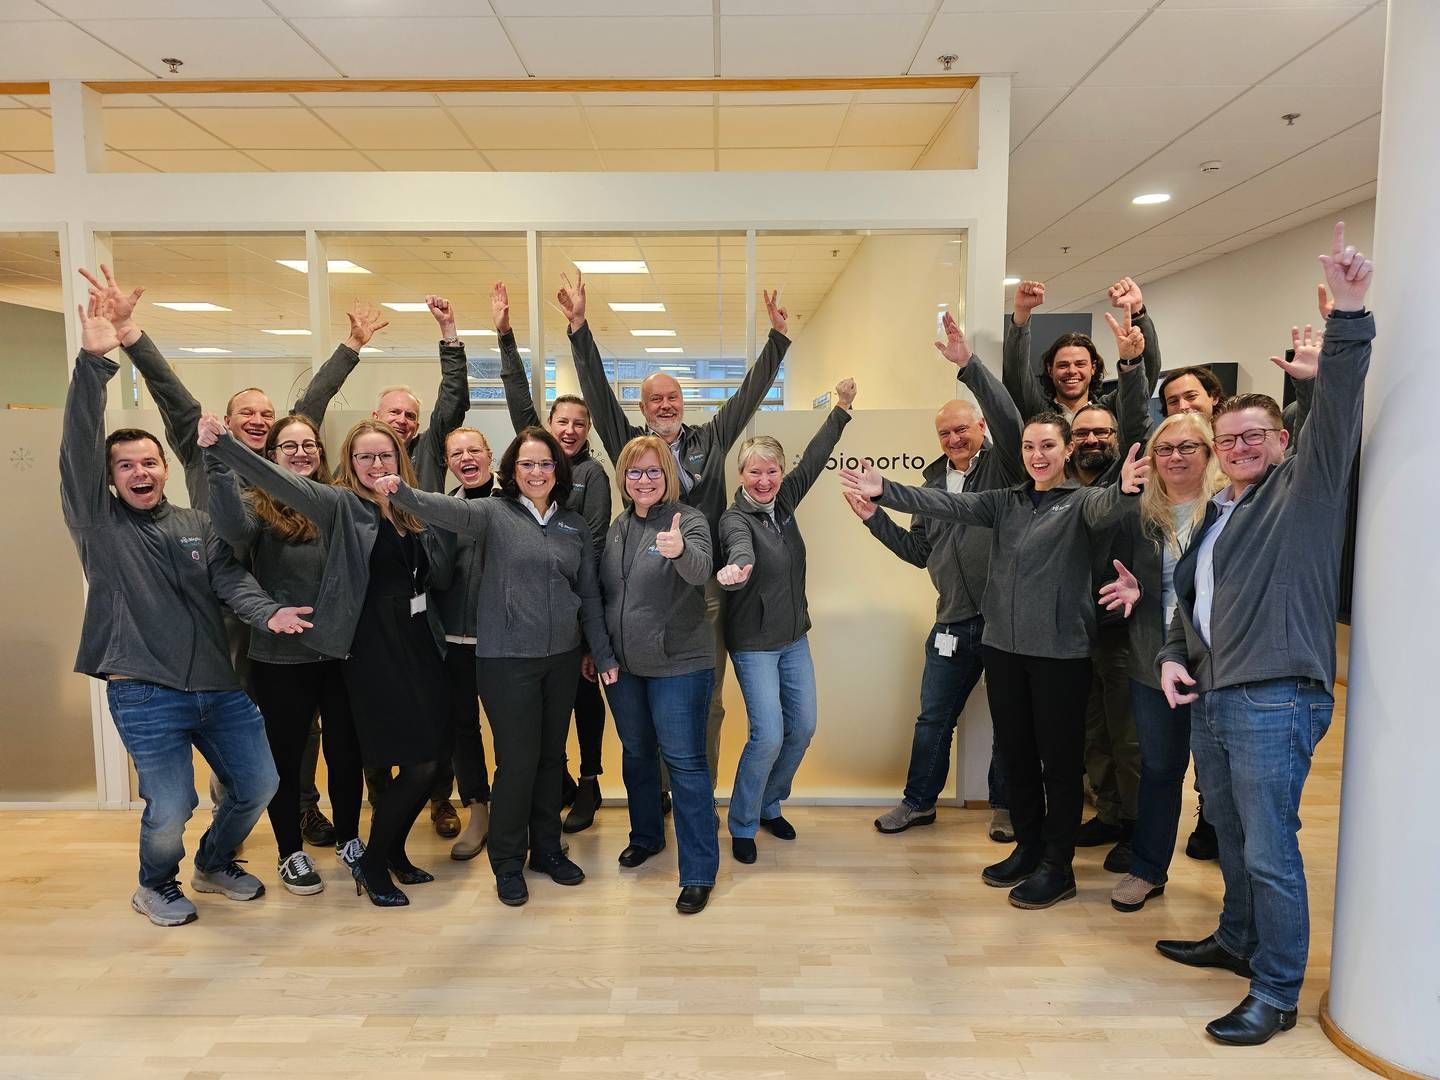 CEO Tony Pare (seventh from right) and his colleagues celebrate the approval at the Bioporto headquarters | Photo: Bioporto / Pr